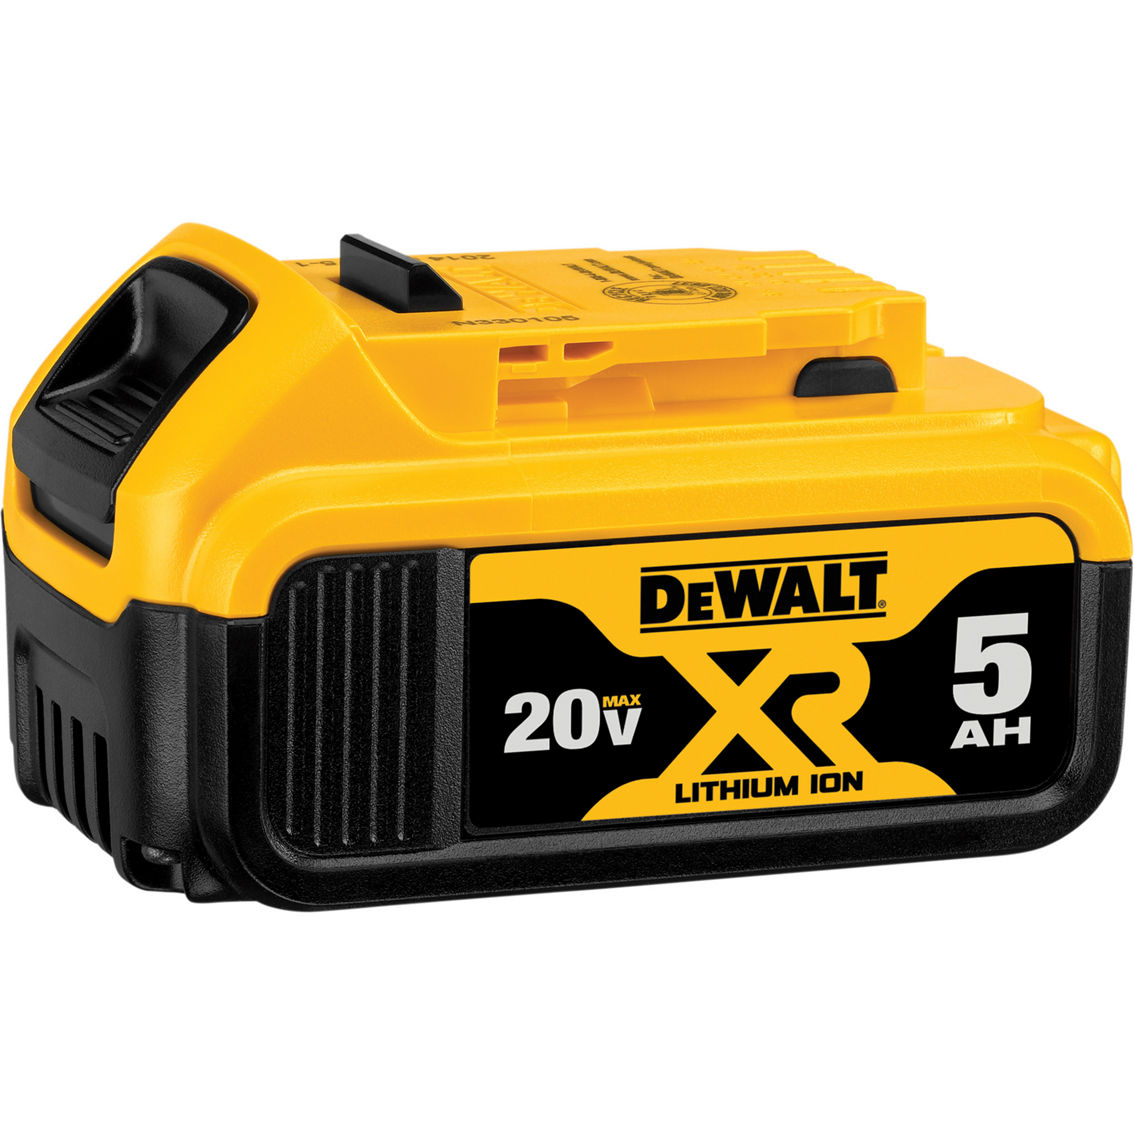 DeWalt DW 20V MAX Premium XR 5.0Ah Li-ion Battery Pack - Image 2 of 7